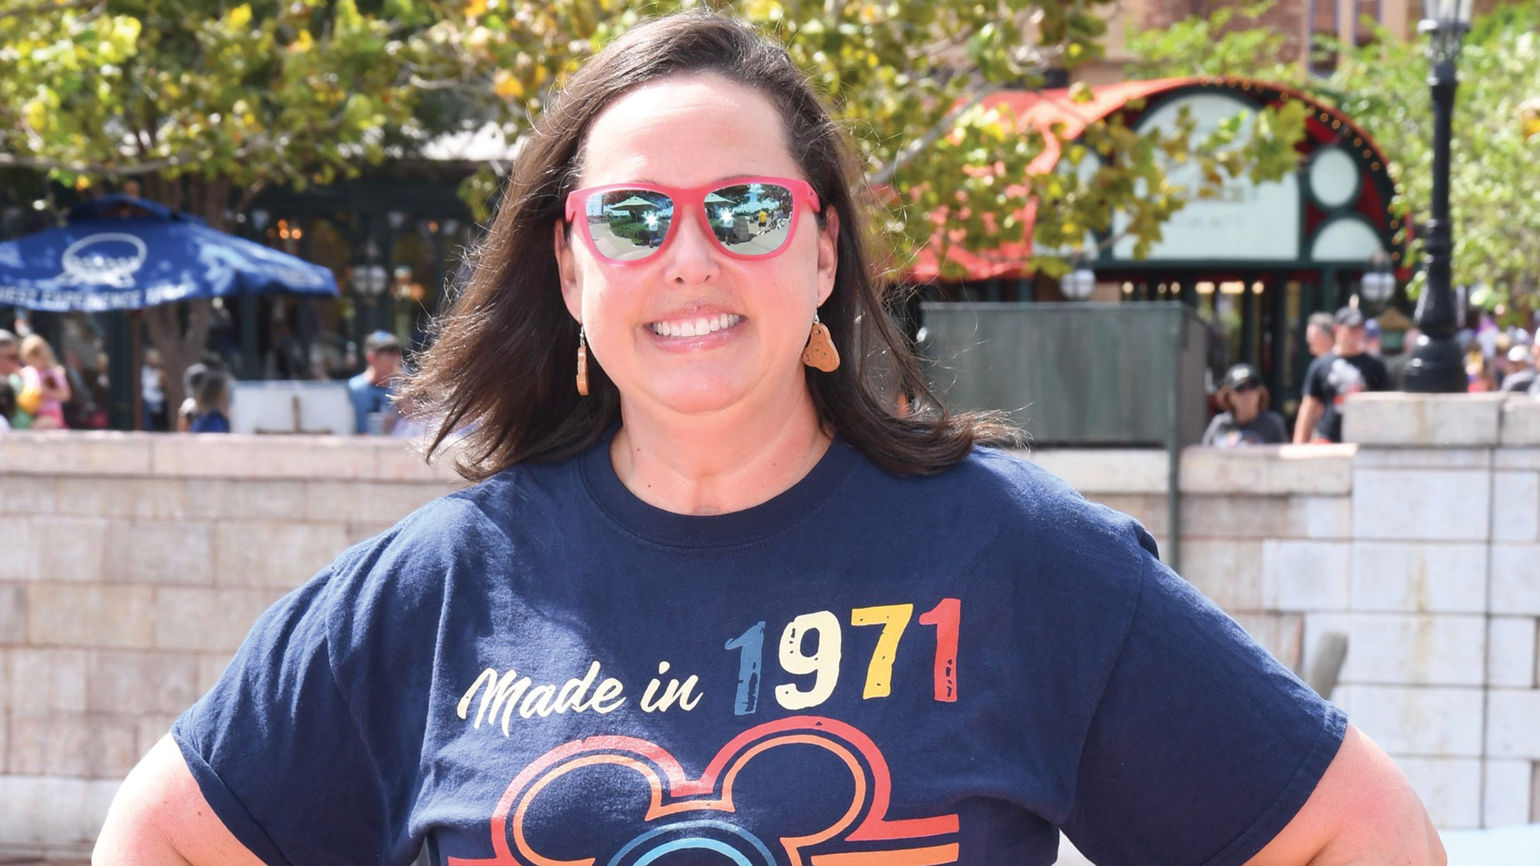 Travel advisor makes her own Disney magic on cruise stop